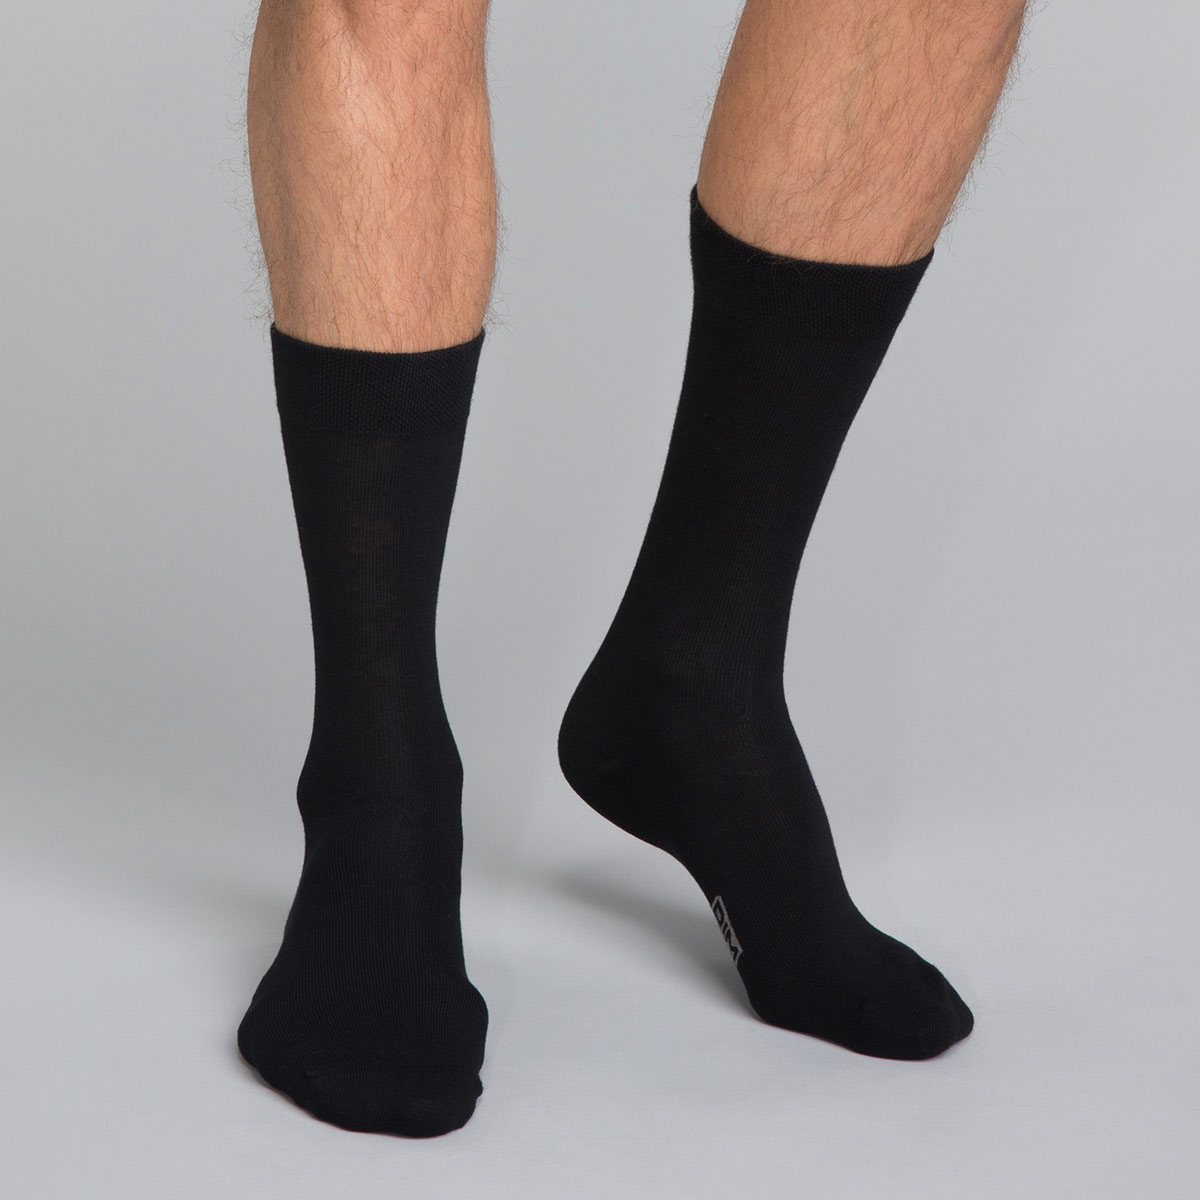 Calcetines para hombre, talla XXL (talla 14-18) (paquete de 6)